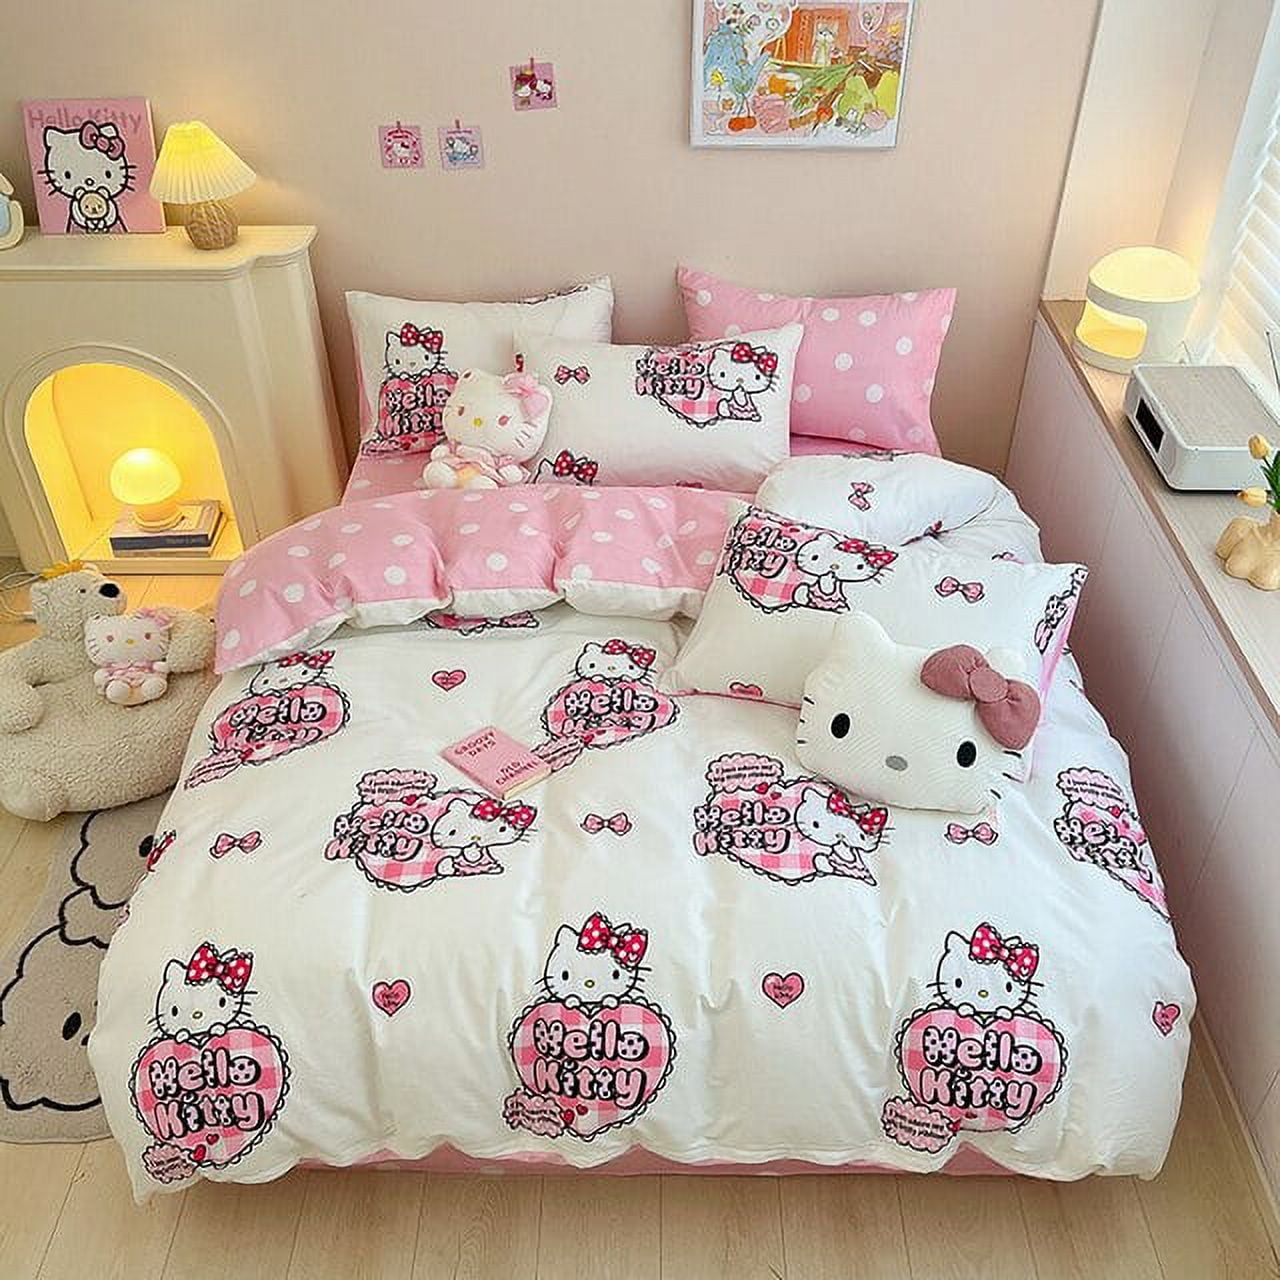 Bedroom Hello Kitty Room Decor - Nursery Bedding - Tulsa, Oklahoma, Facebook Marketplace